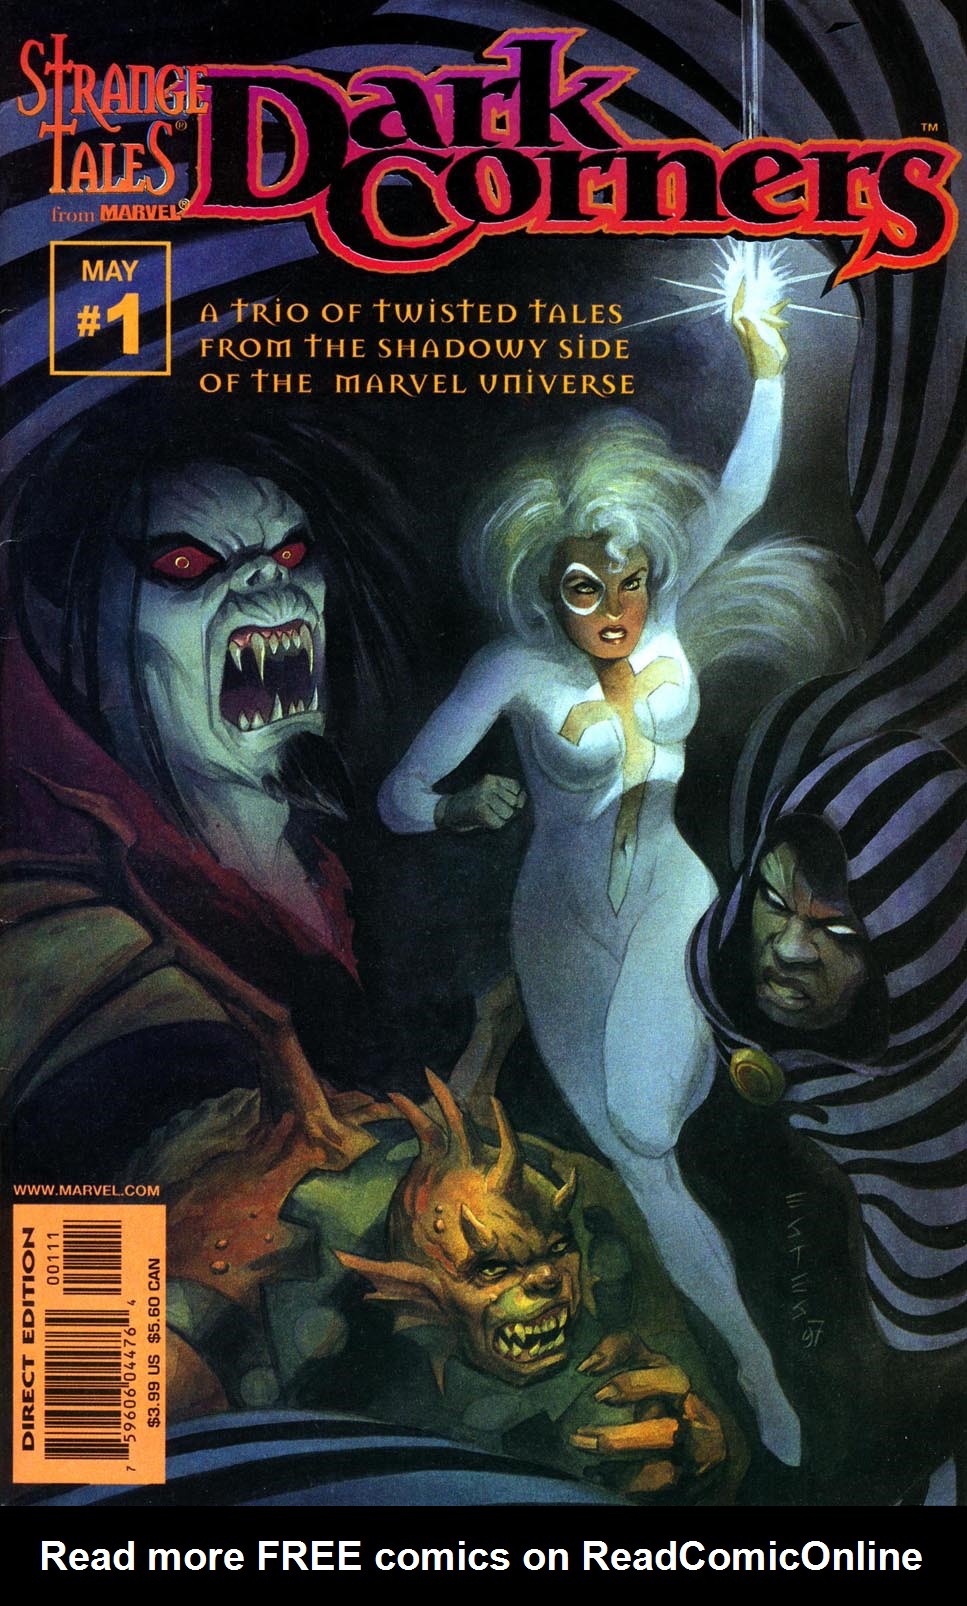 Read online Strange Tales: Dark Corners comic -  Issue # Full - 1